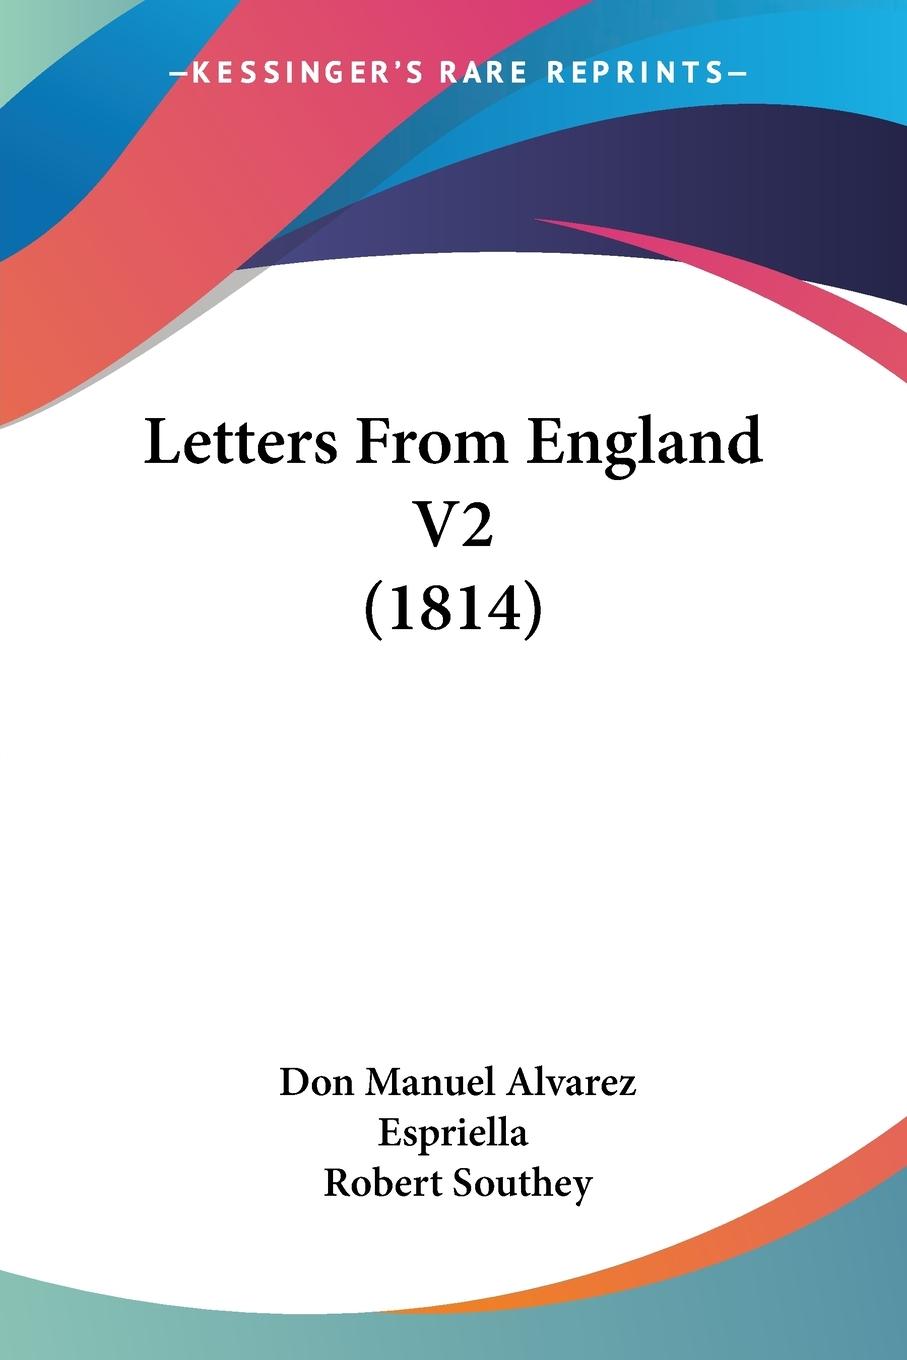 Letters From England V2 (1814) - Espriella, Don Manuel Alvarez